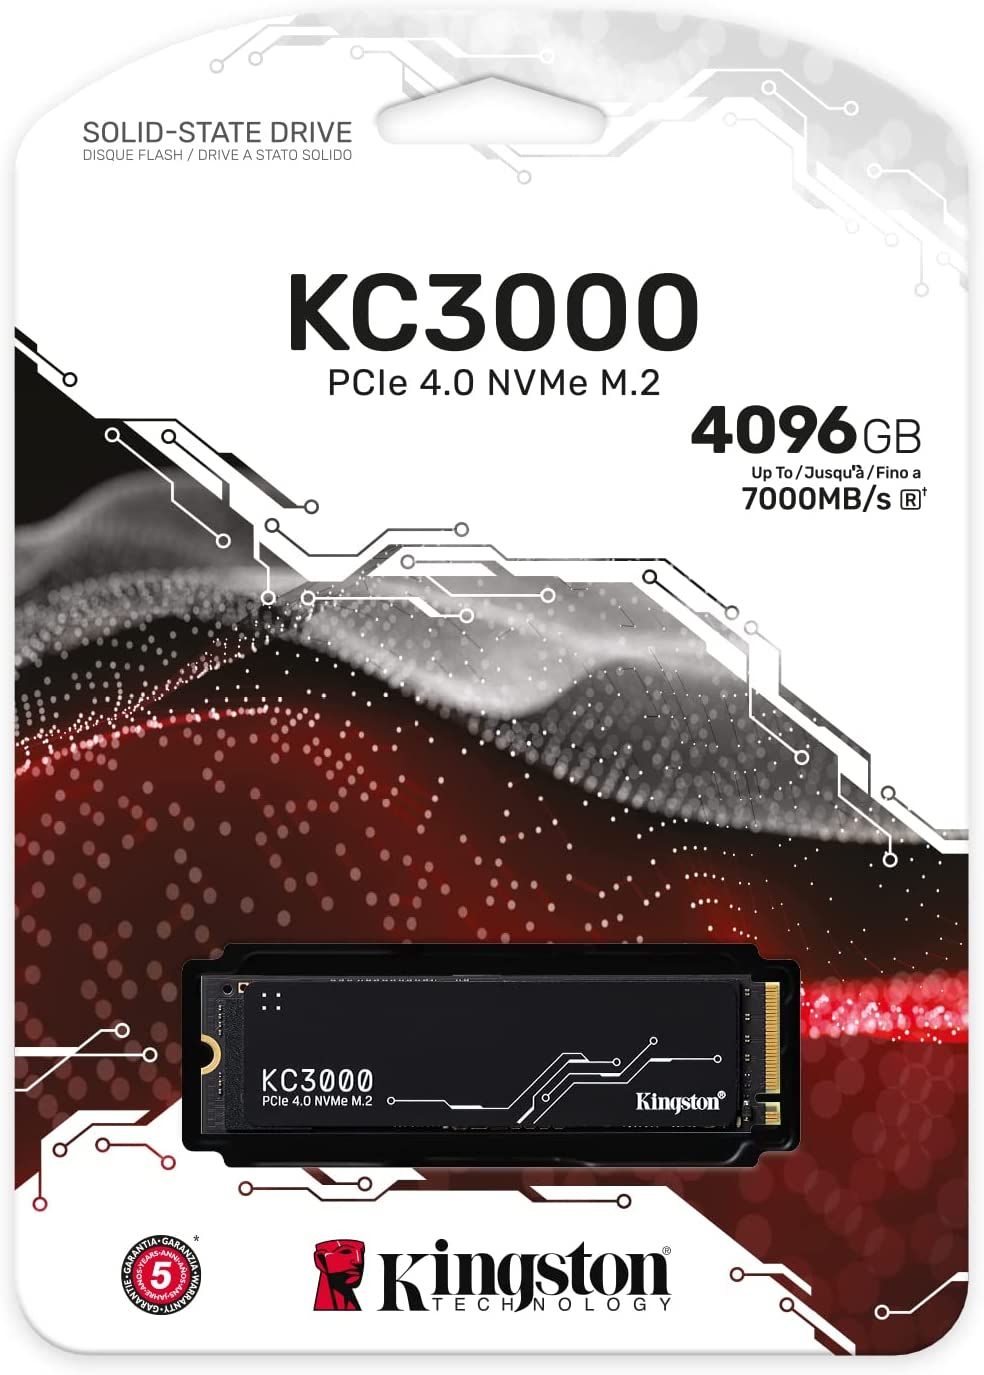 SAMSUNG 980 PRO SSD 1To M.2 NVMe PCIe 4.0 - MZ-V8P1T0CW - CARON